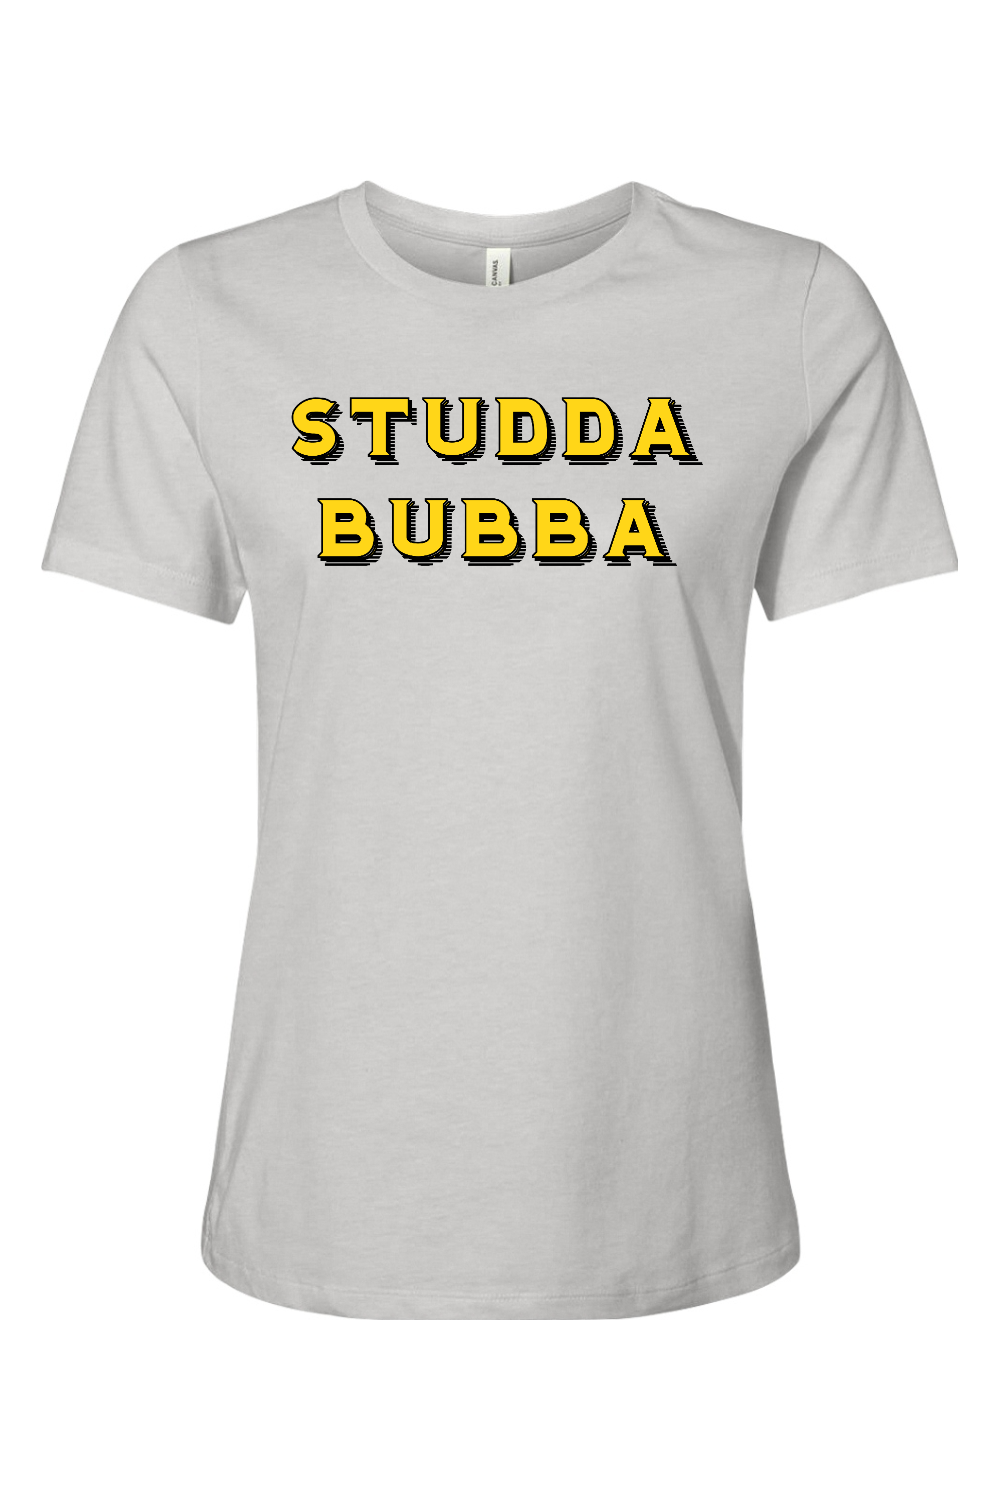 Studda Bubba - Ladies Tee - Yinzylvania